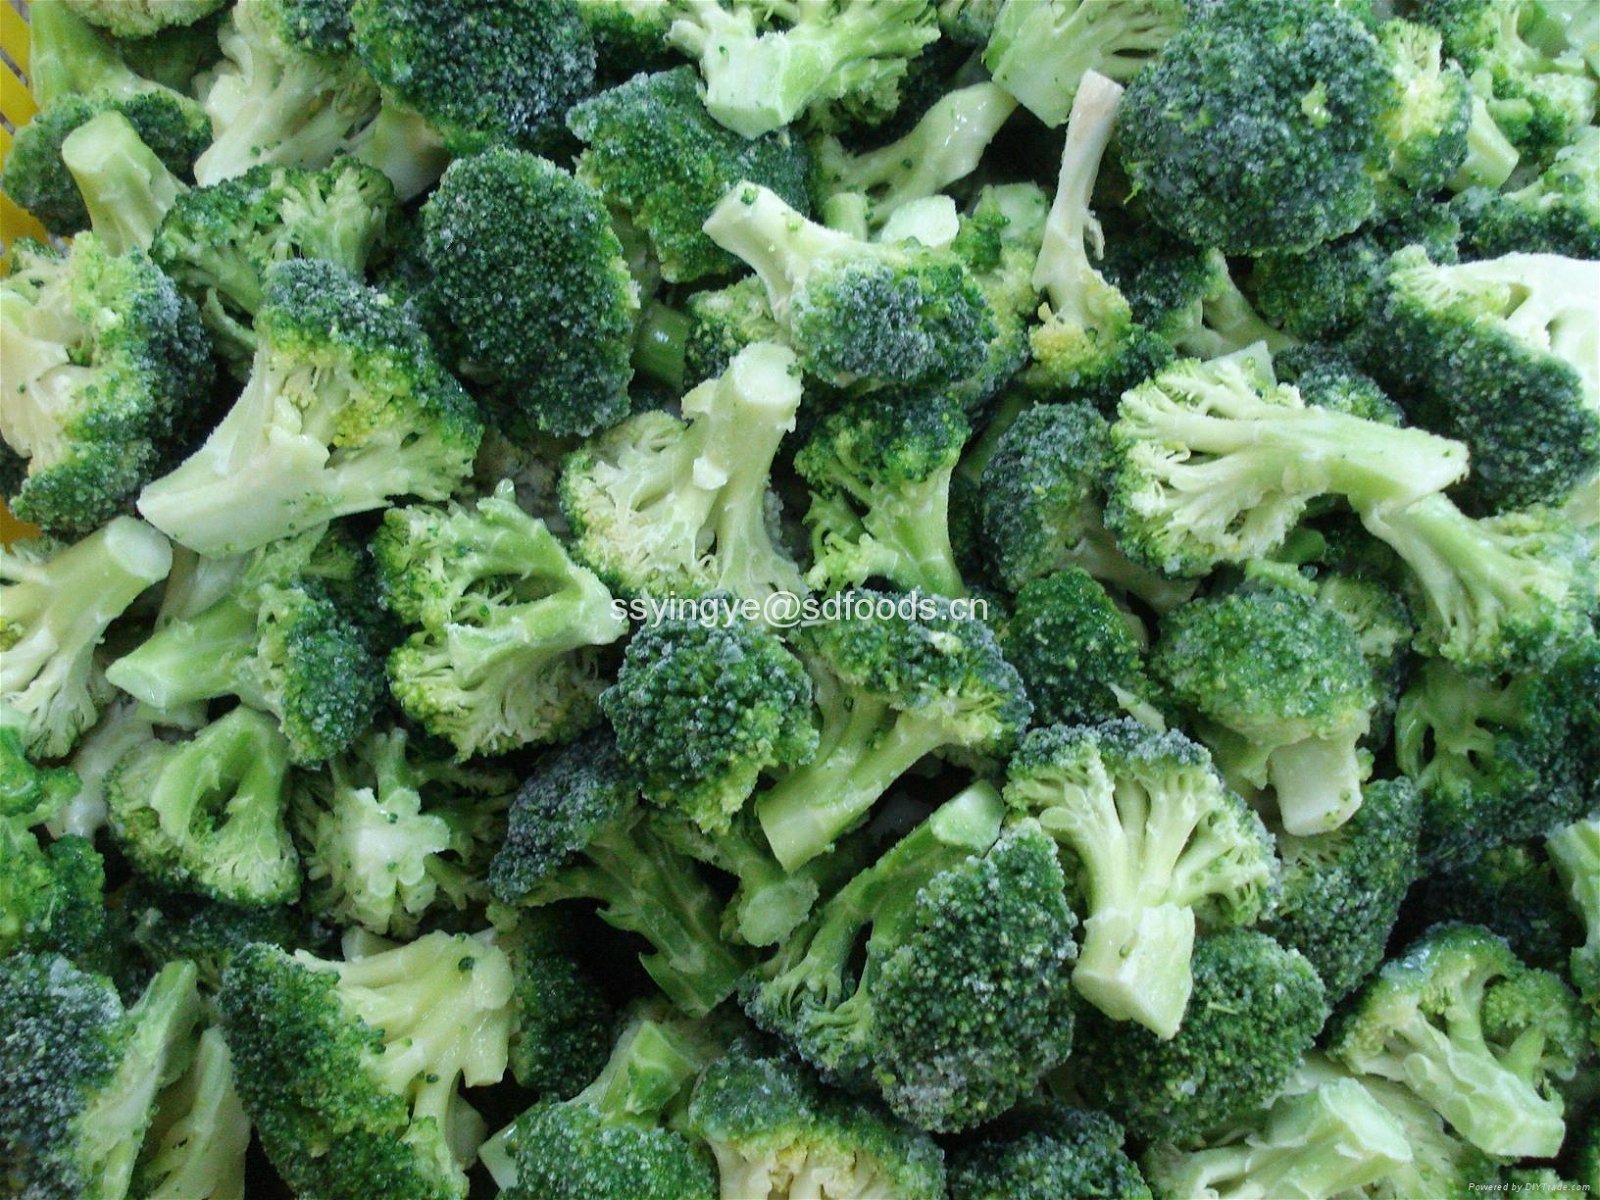 Frozen broccoli 2